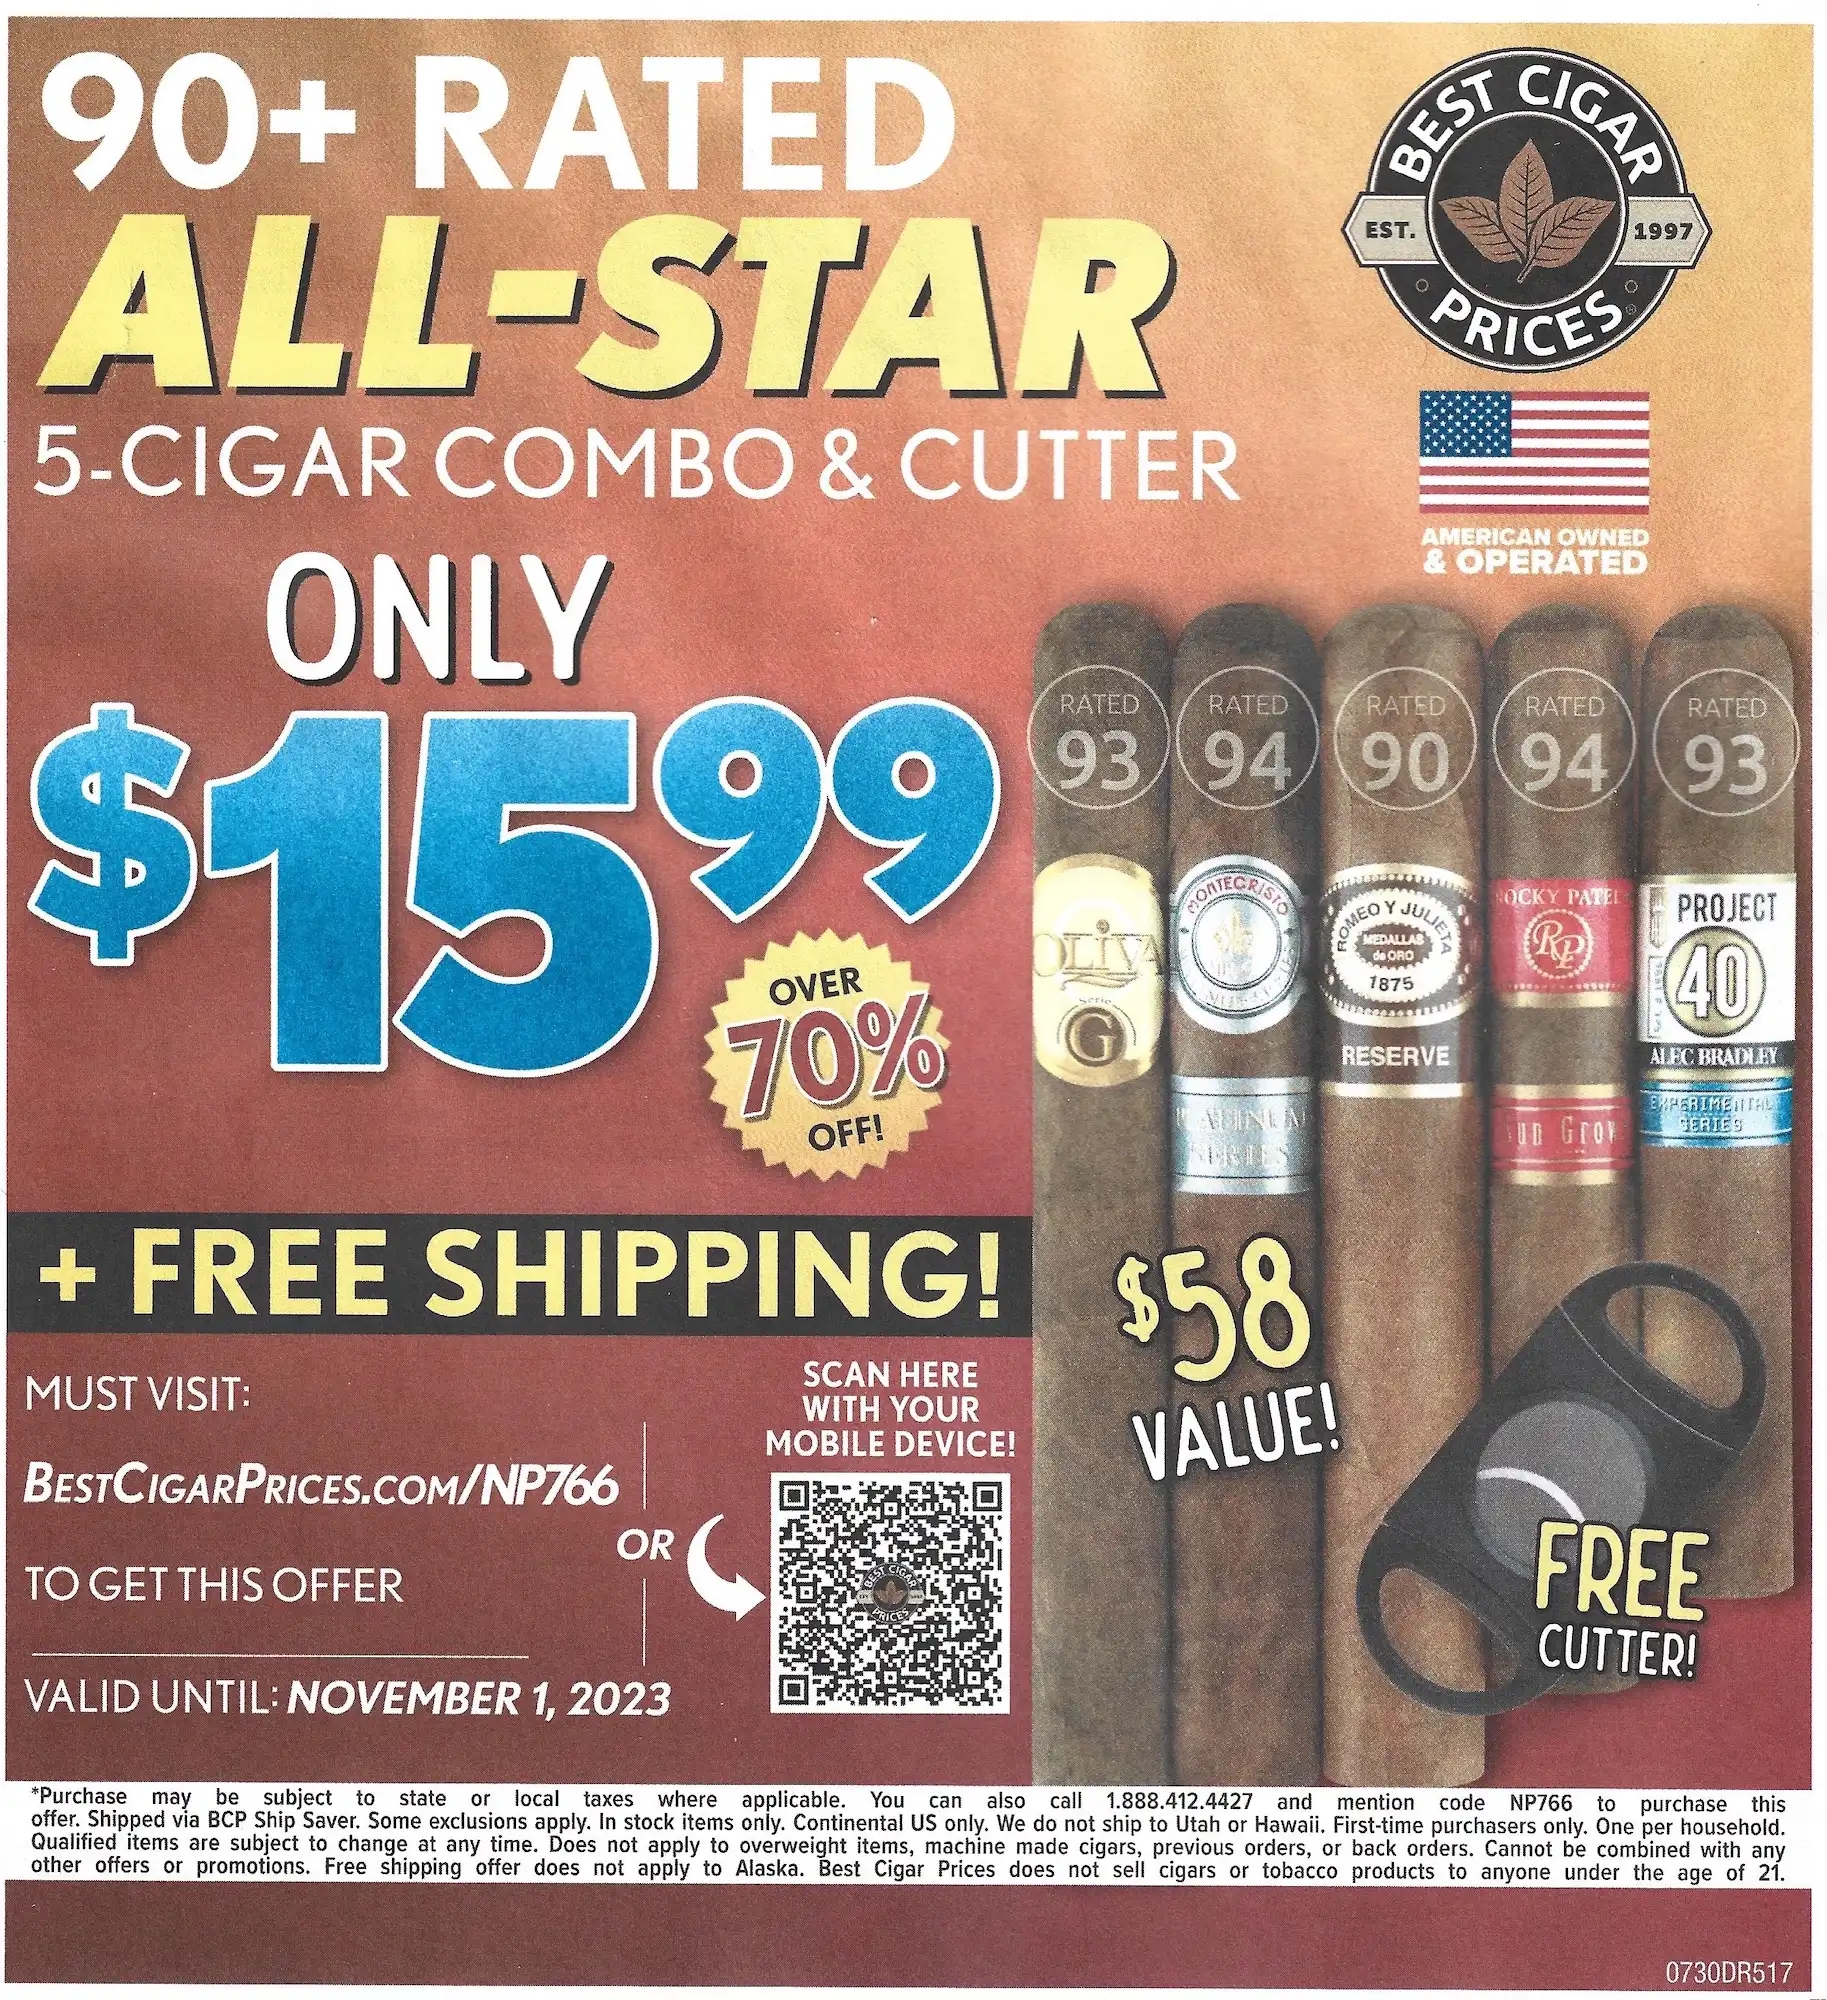 BestCigarPrices.com: 5-Cigar Combo Promo Code - Expires 11/01/2023